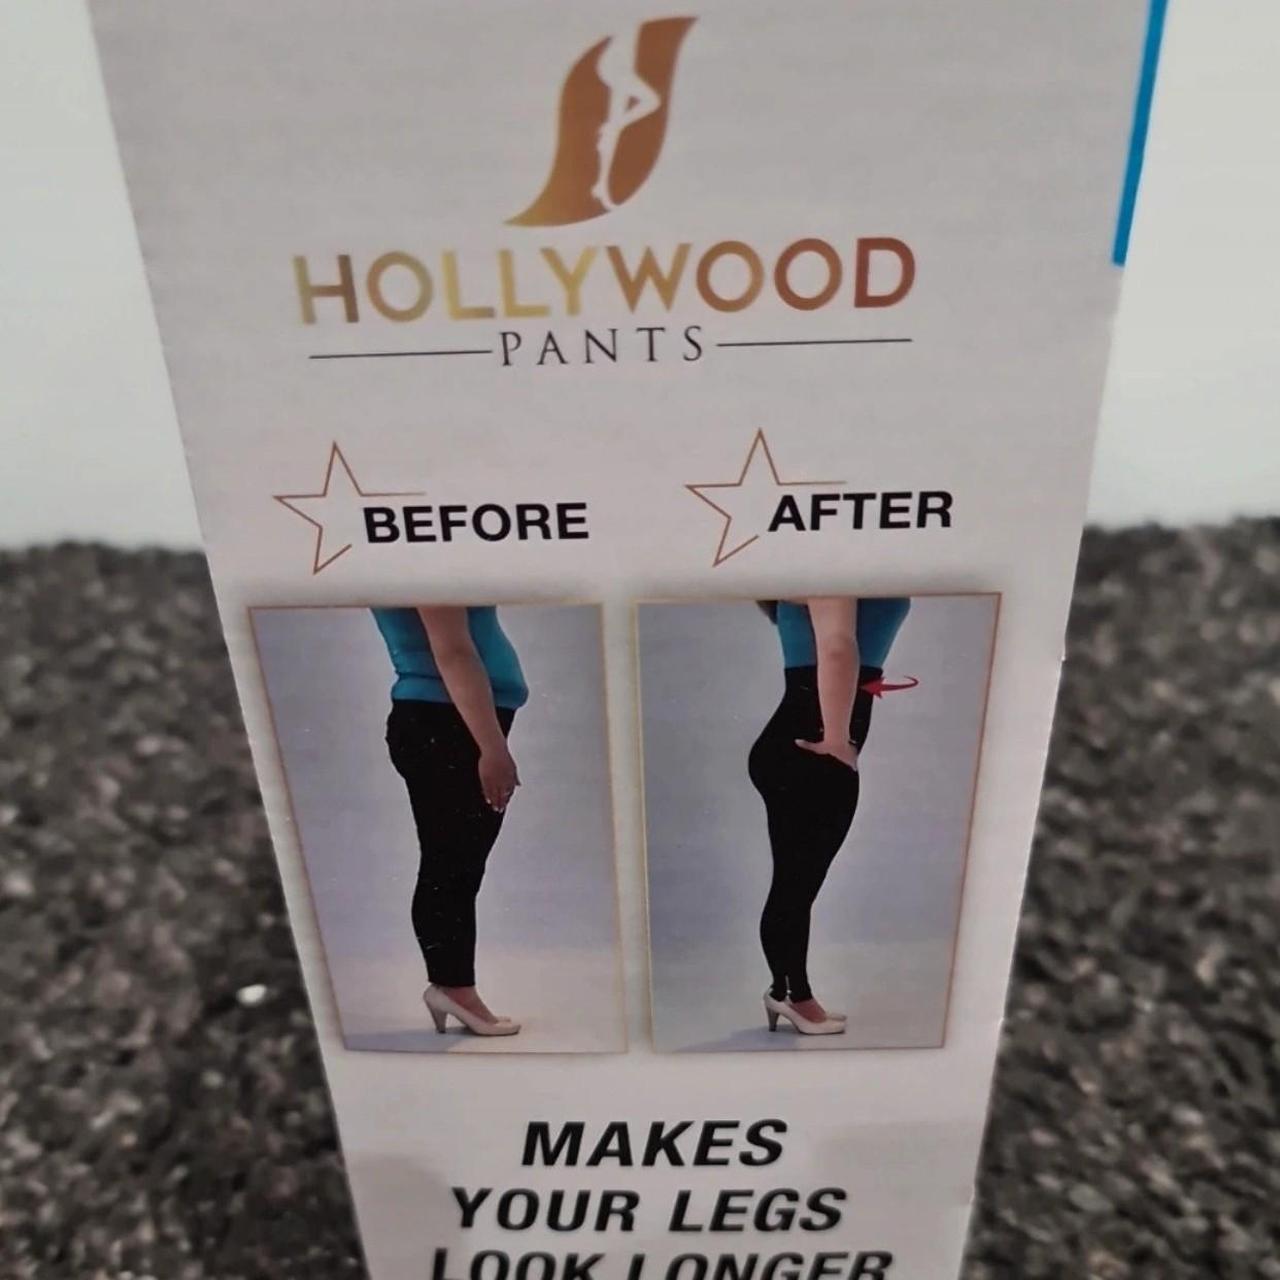 JML Hollywood Pants High waisted Shapewear Leggings